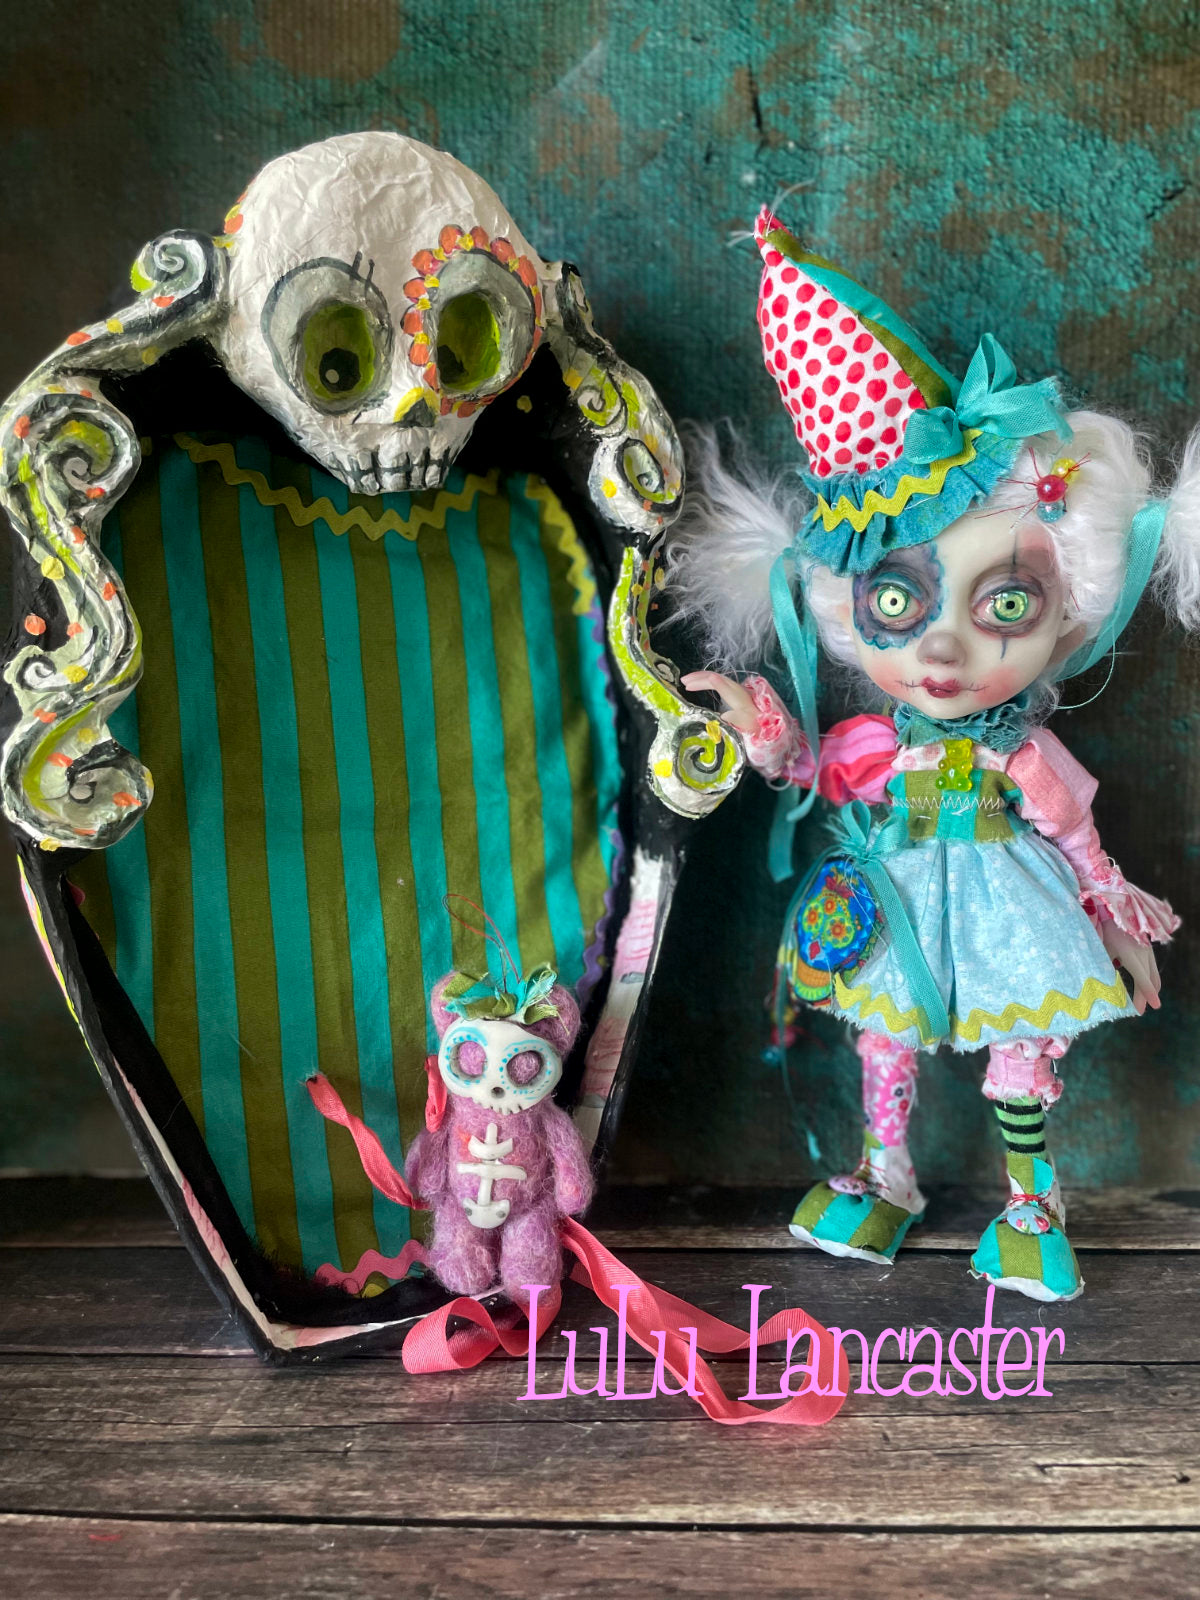 Payasa Poupee Day of the dead clown in skull box Original LuLu Lancaster Art Doll